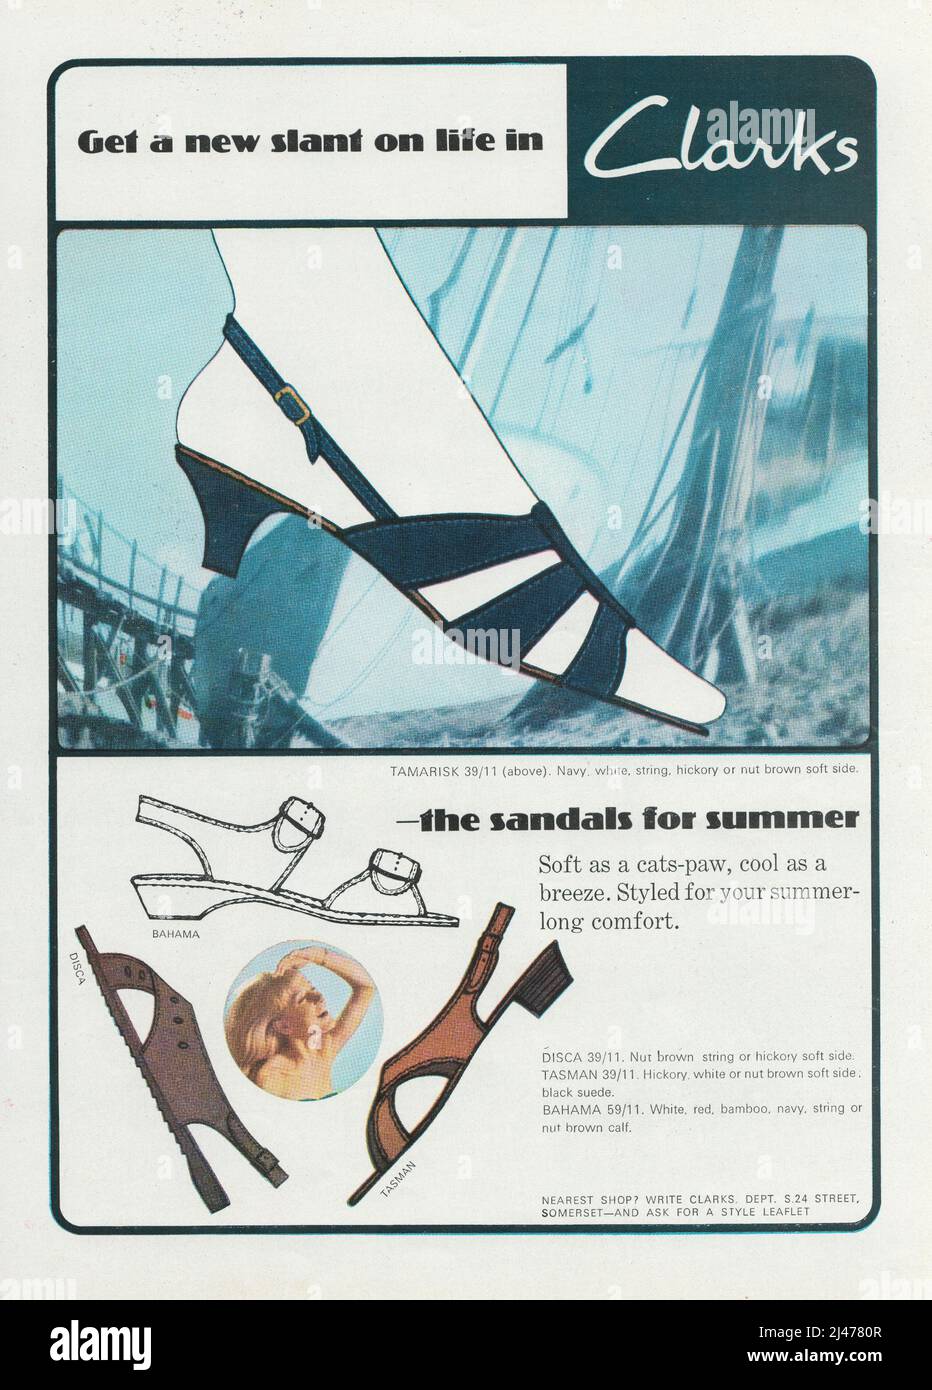 Clarks sandales clarks chaussures pour femmes clarks chaussures pour l'été  publicité publicité publicité publicité 1960s vintage publicité Photo Stock  - Alamy